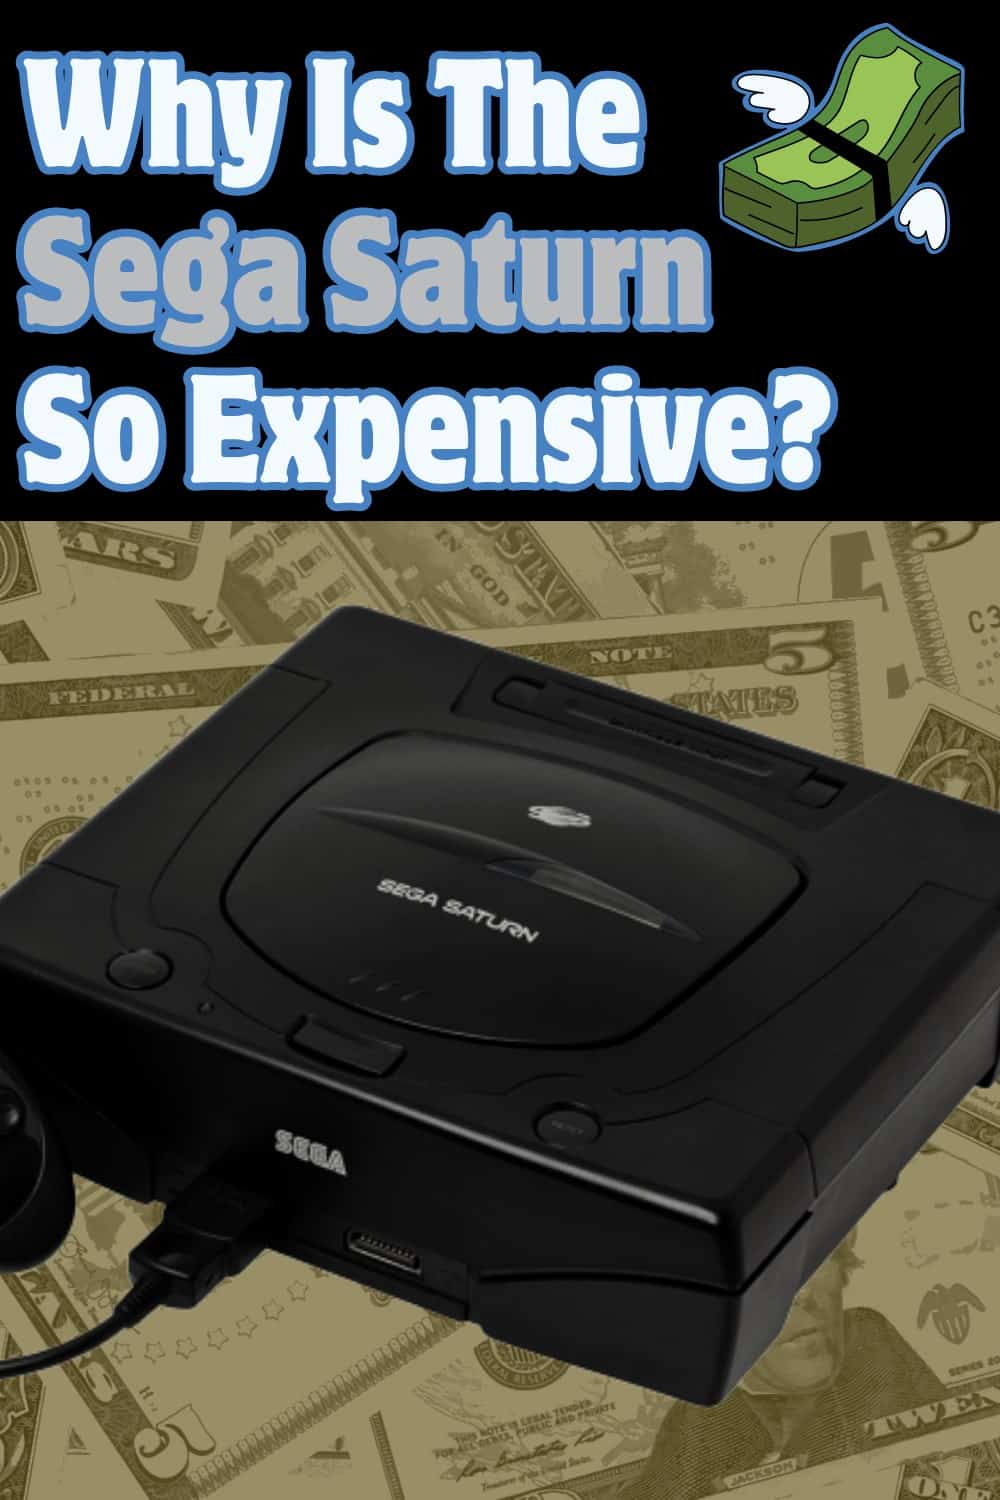 Scarcity and high demand make the Sega Saturn expensive